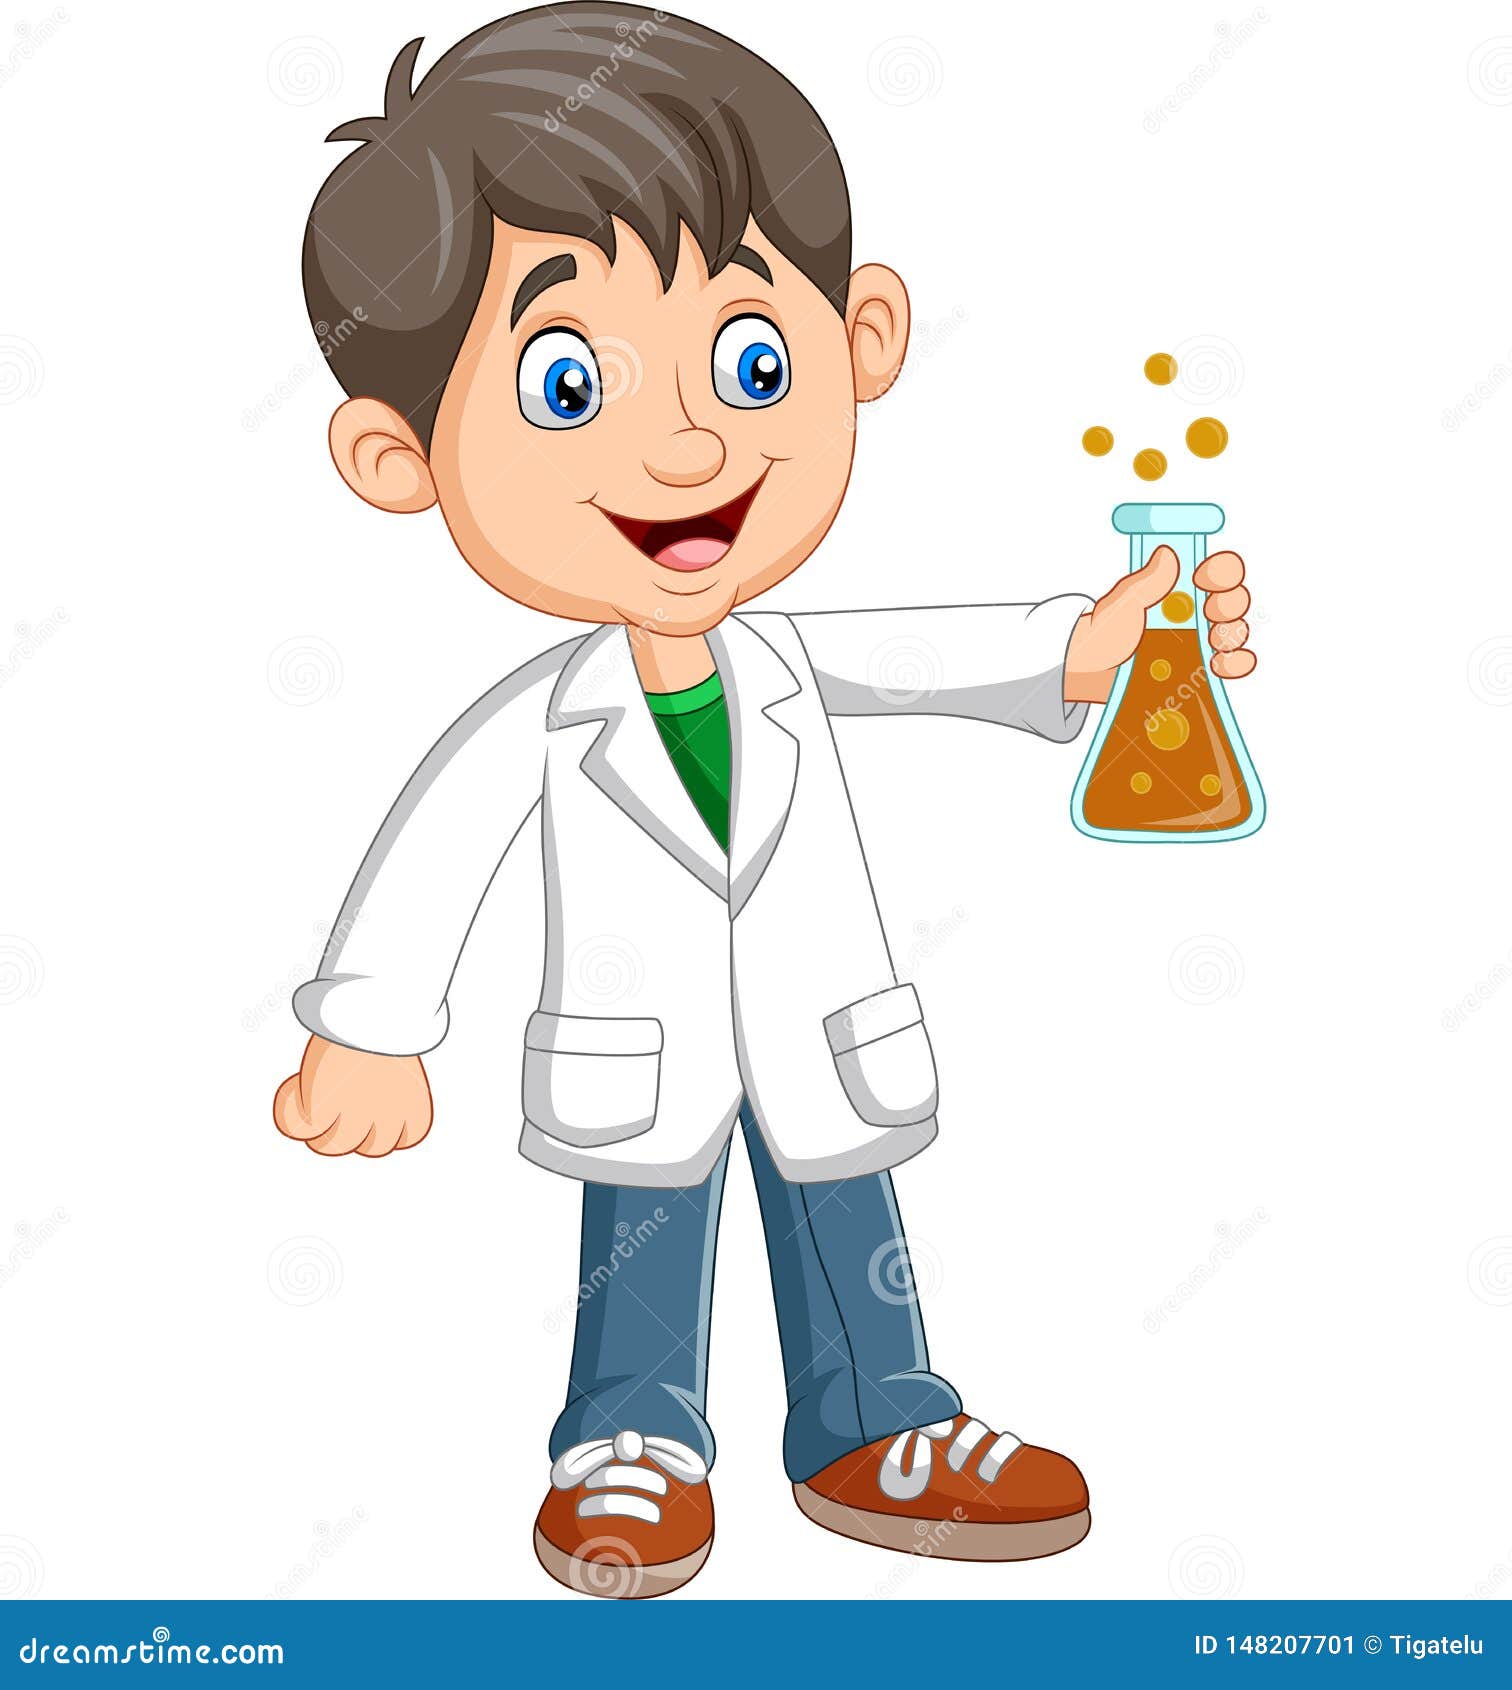 Cartoon Boy Scientist Holding Test Tube Stock Vector - Illustration of  flask, male: 148207701